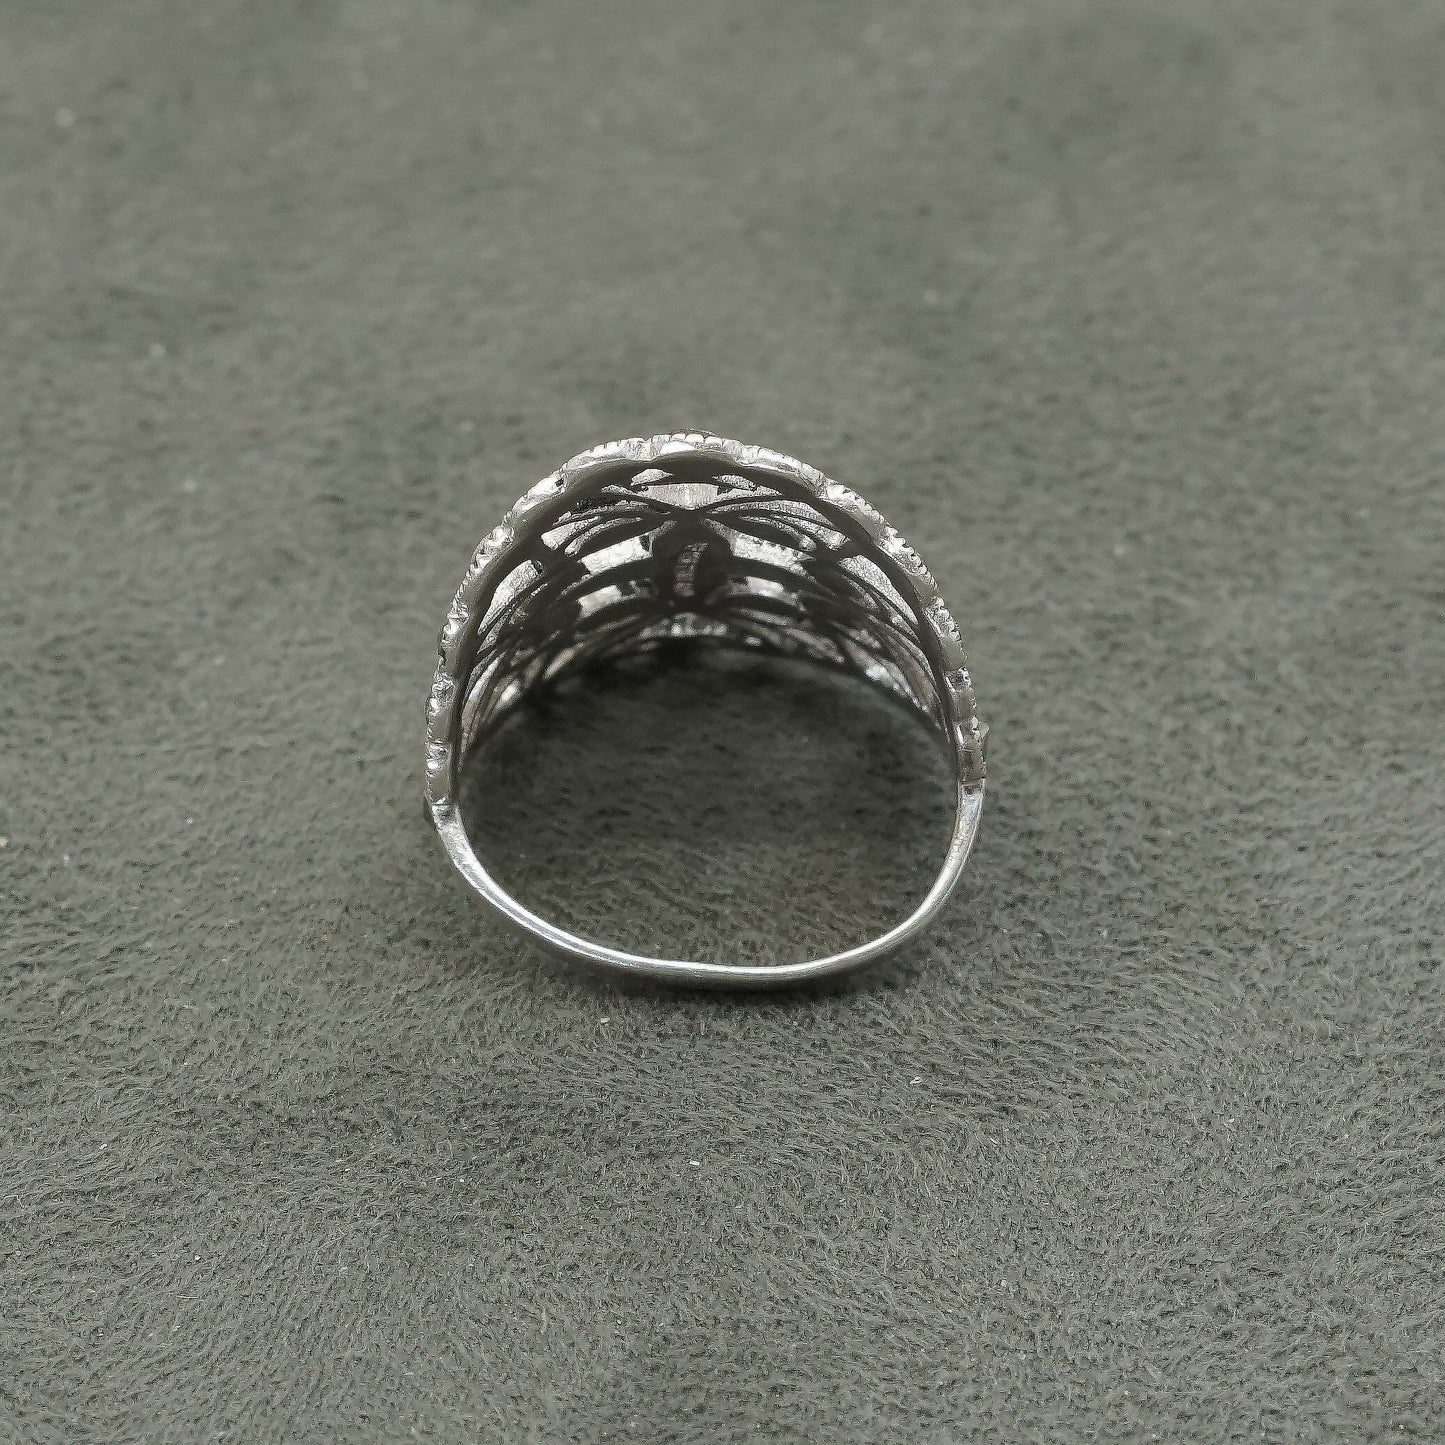 sz 5.75, vtg Sterling silver handmade ring, 925 filigree band w/ marcasite